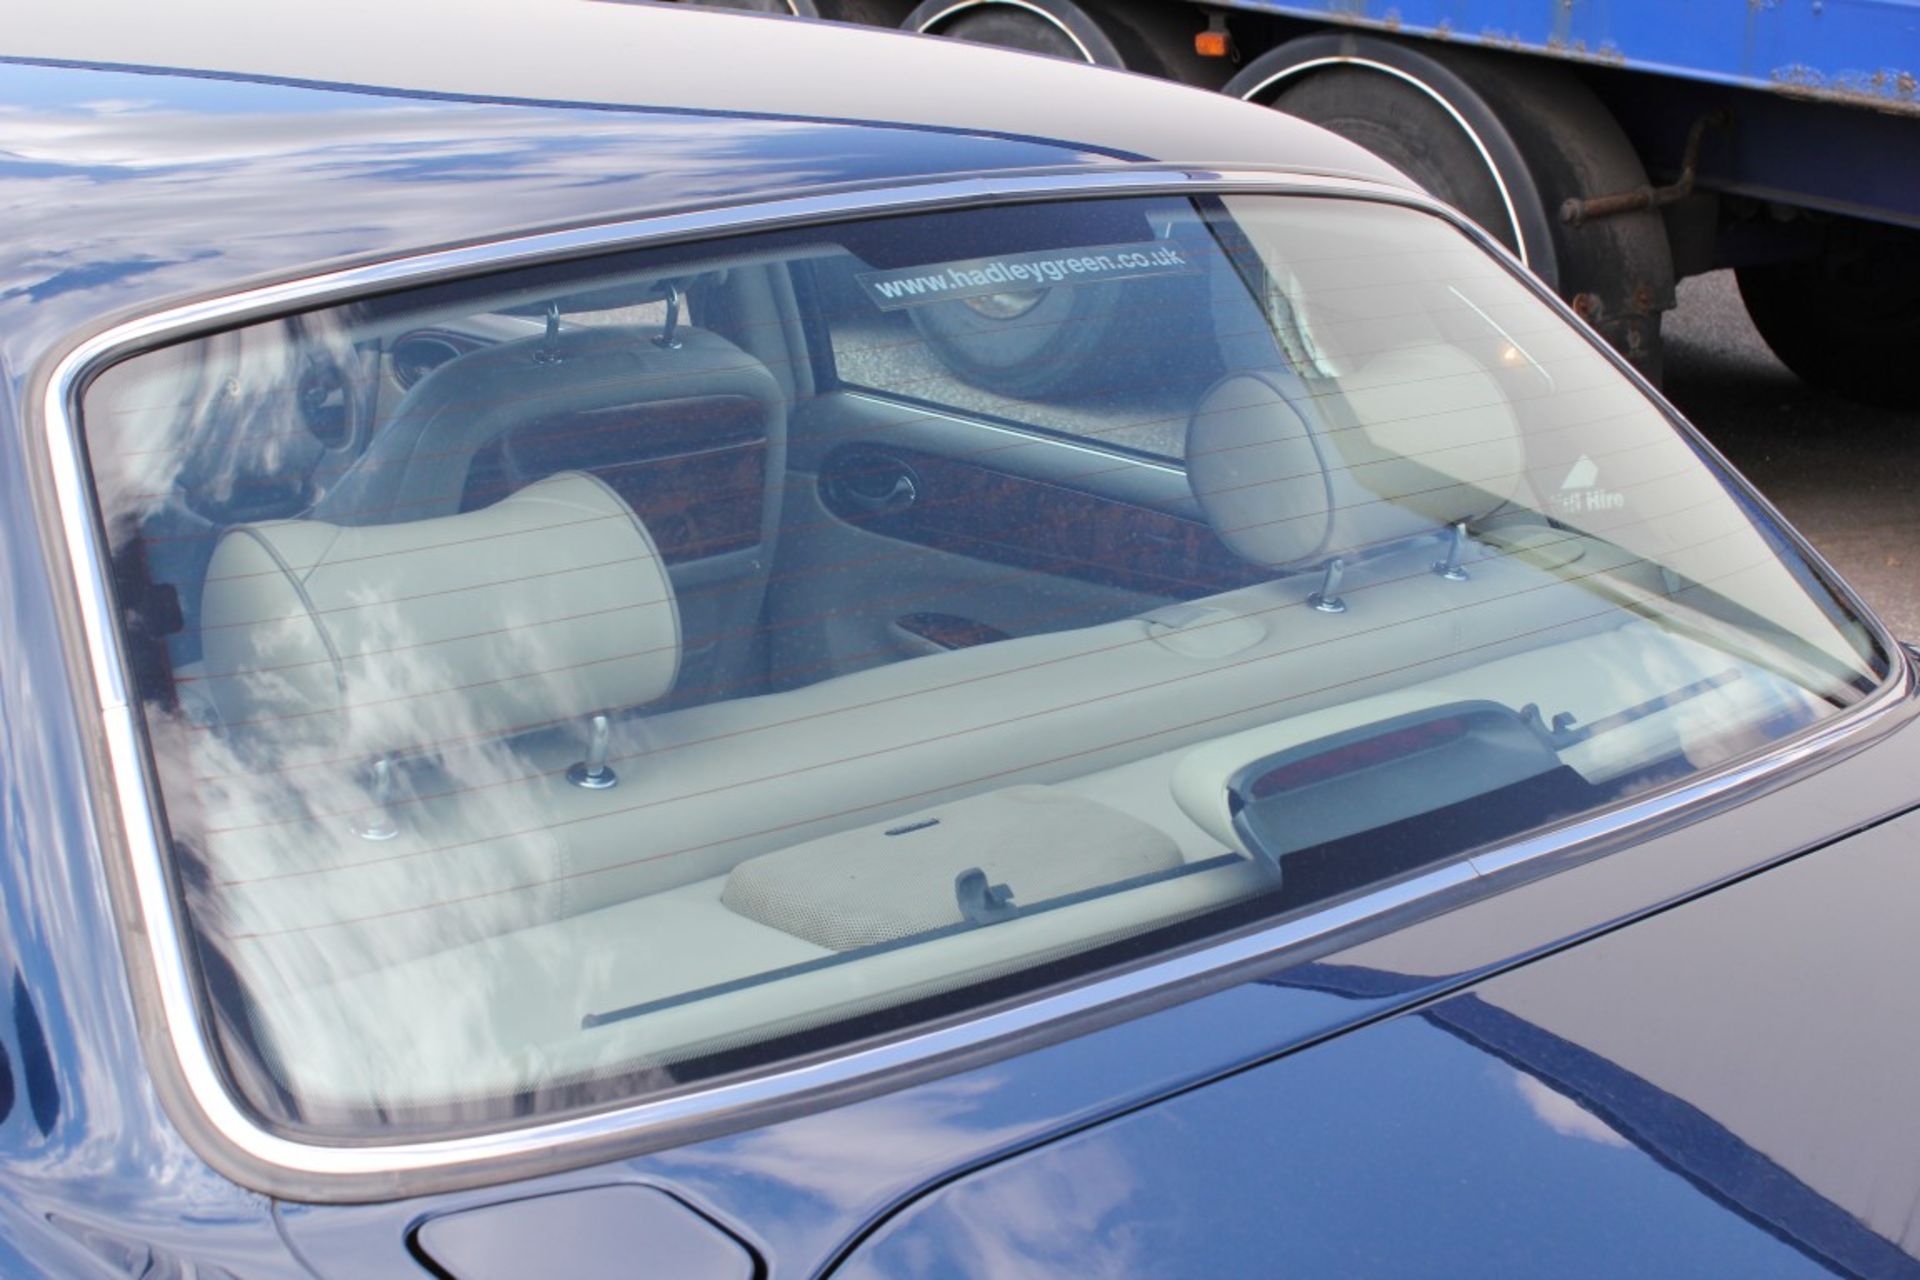 1 x Jaguar Daimler Super V8 Auto 4-Door Saloon - Year 2001 - Blue - Odometer Reading 122,520 - MOT - Image 42 of 77